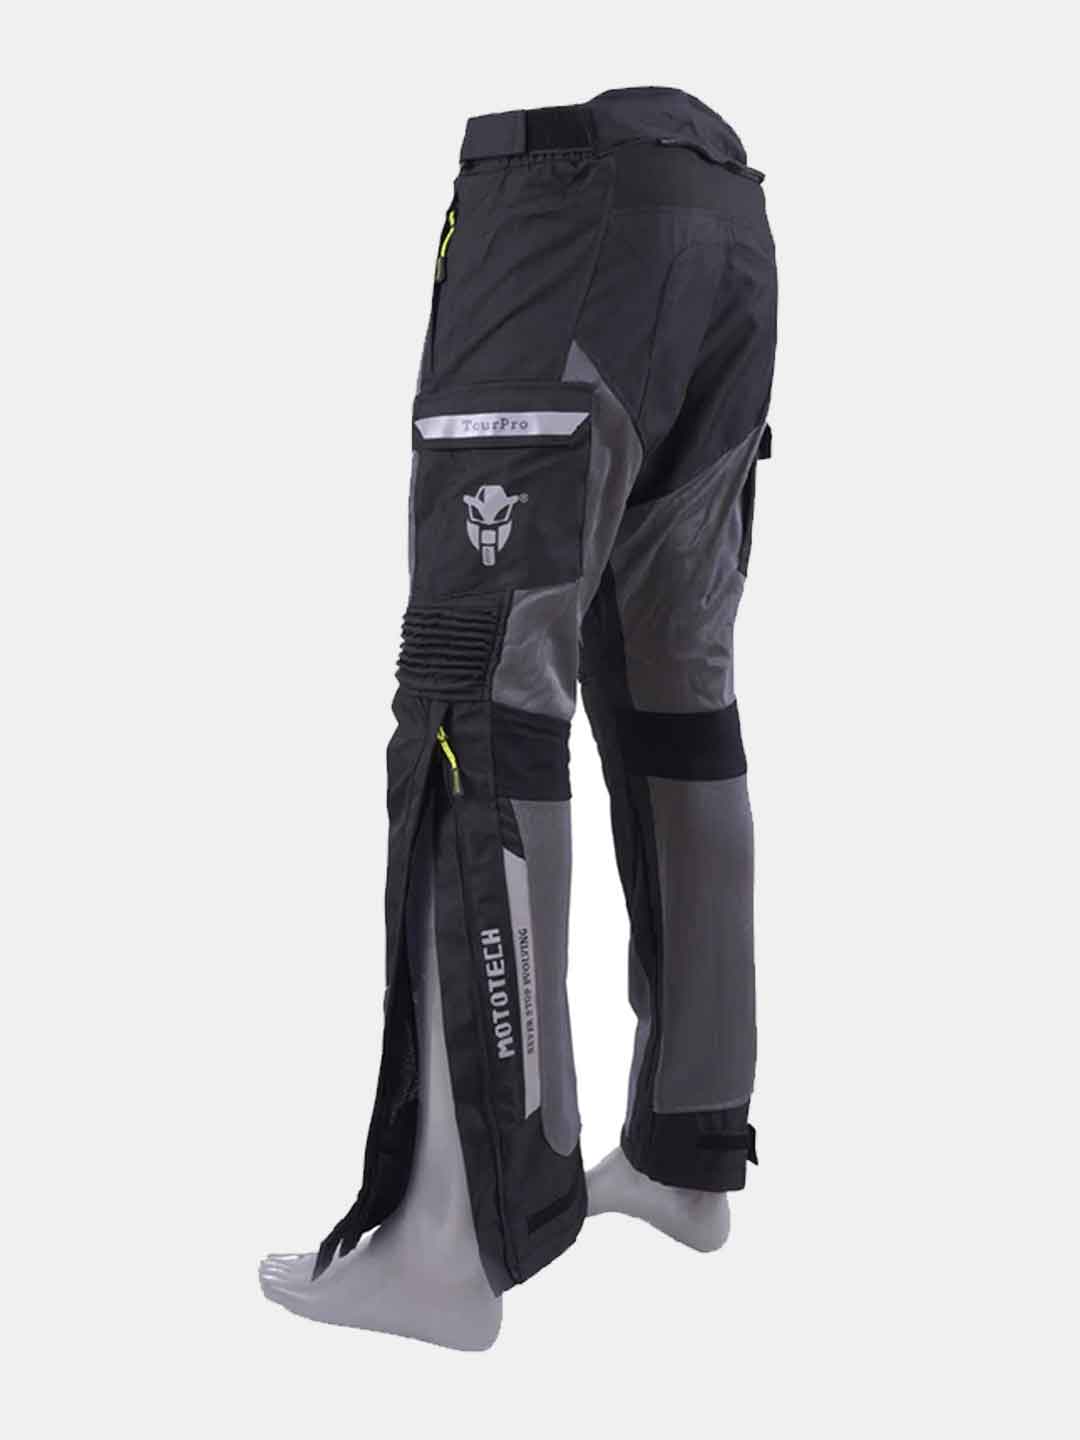 RG Men's Knee Grip Breeches- Riding Clothes